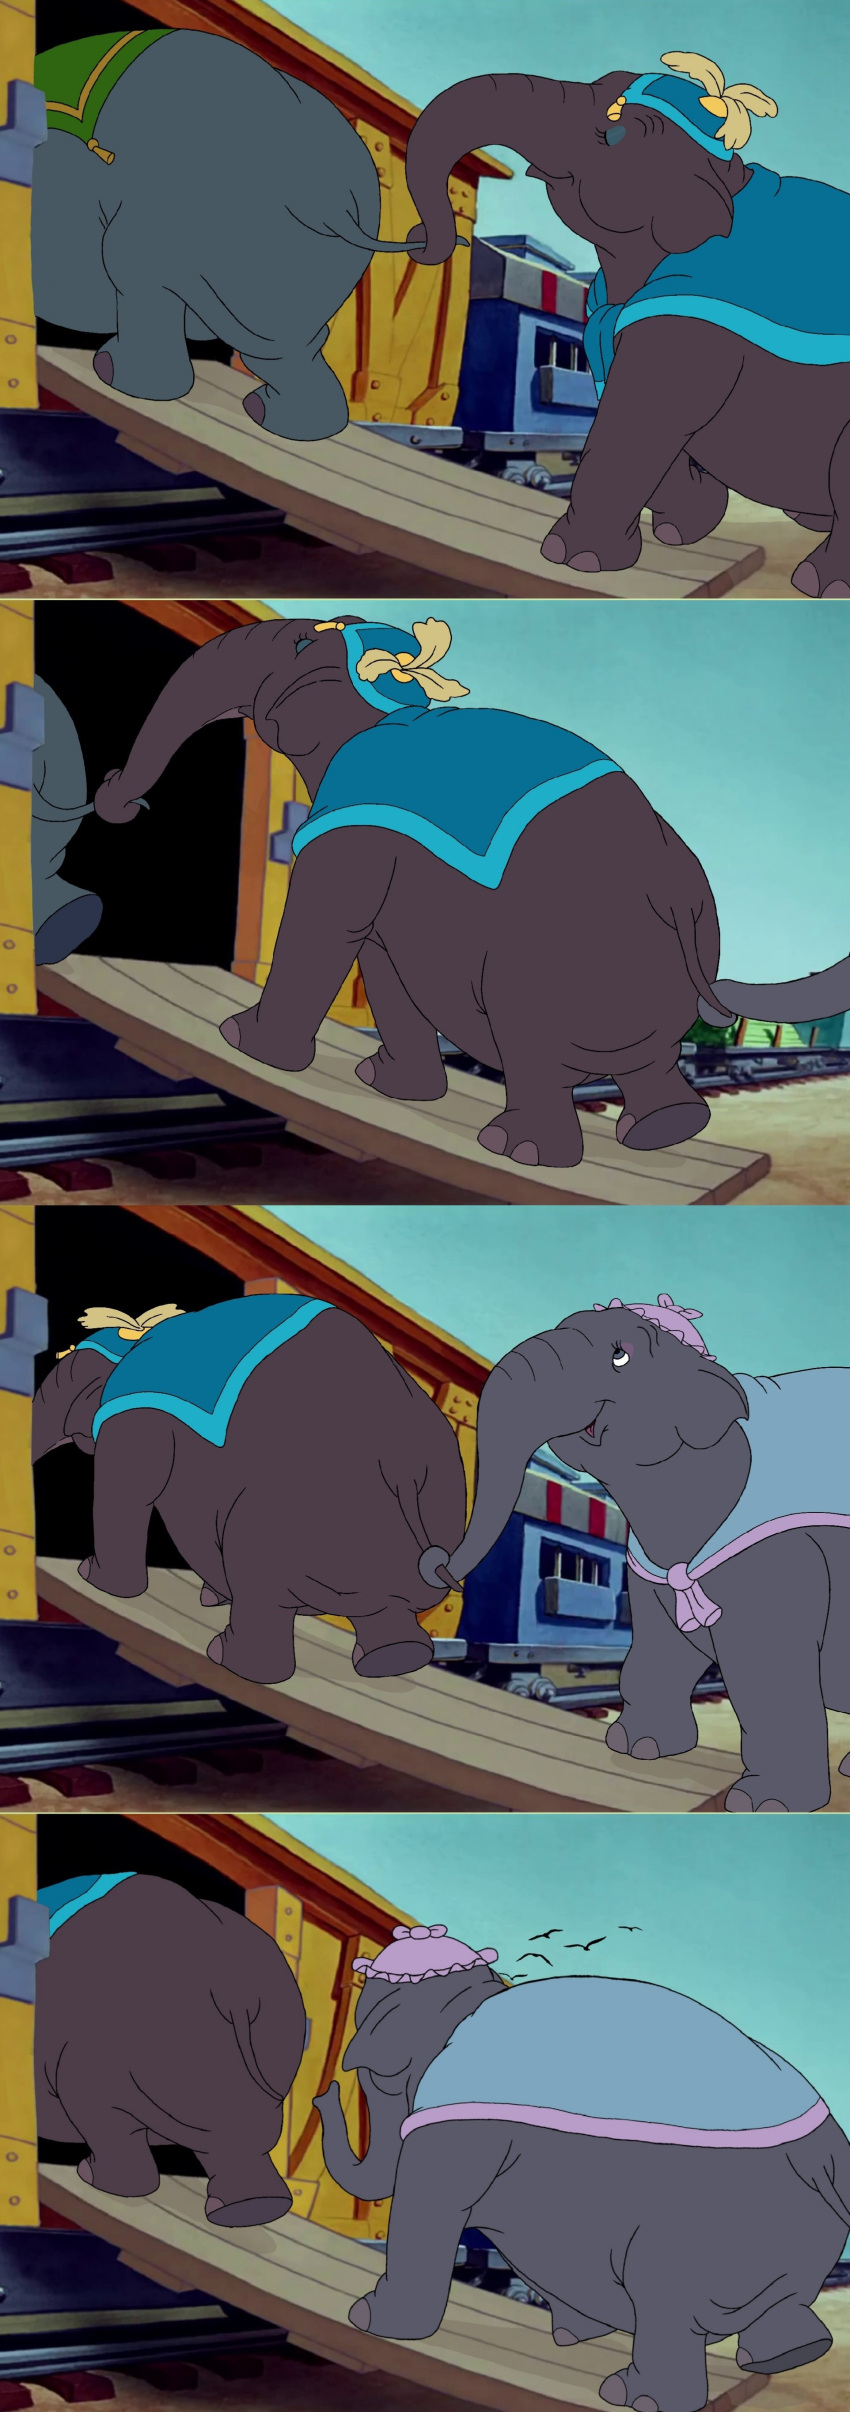 big_ass big_ass catty_(dumbo) dumbo elephant giddy_(dumbo) mrs._jumbo_(dumbo) mrsjumbo pachyderm plump plump_ass train